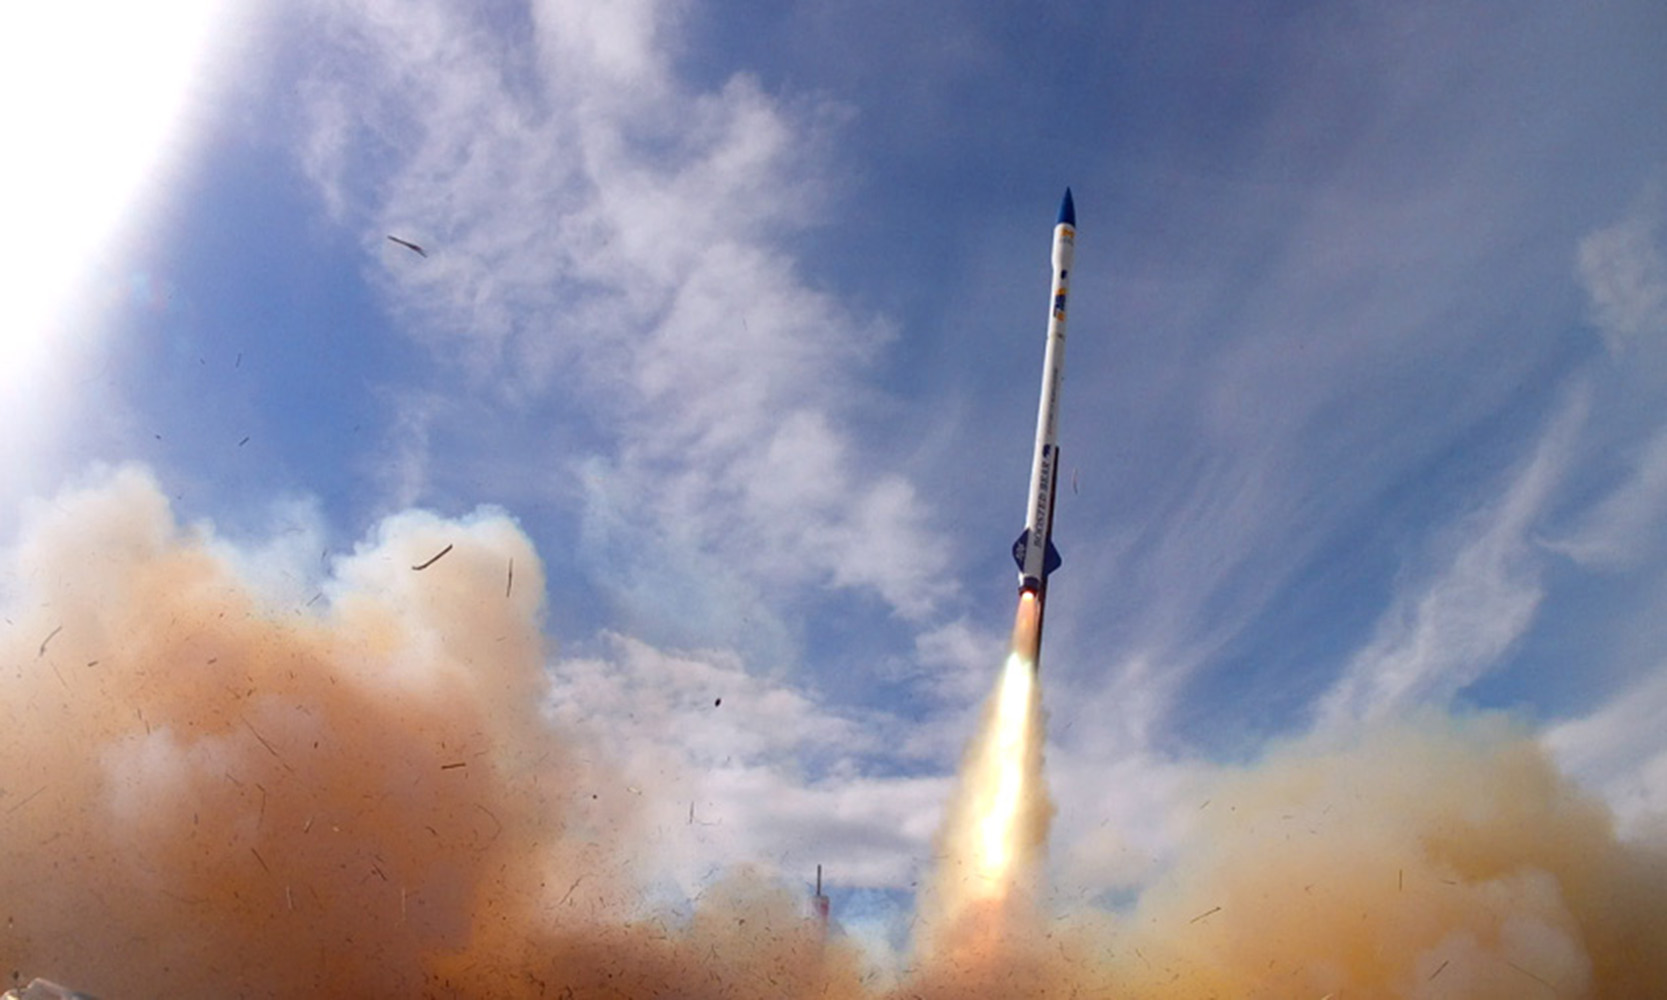 UM-Dearborn student rocket team launch